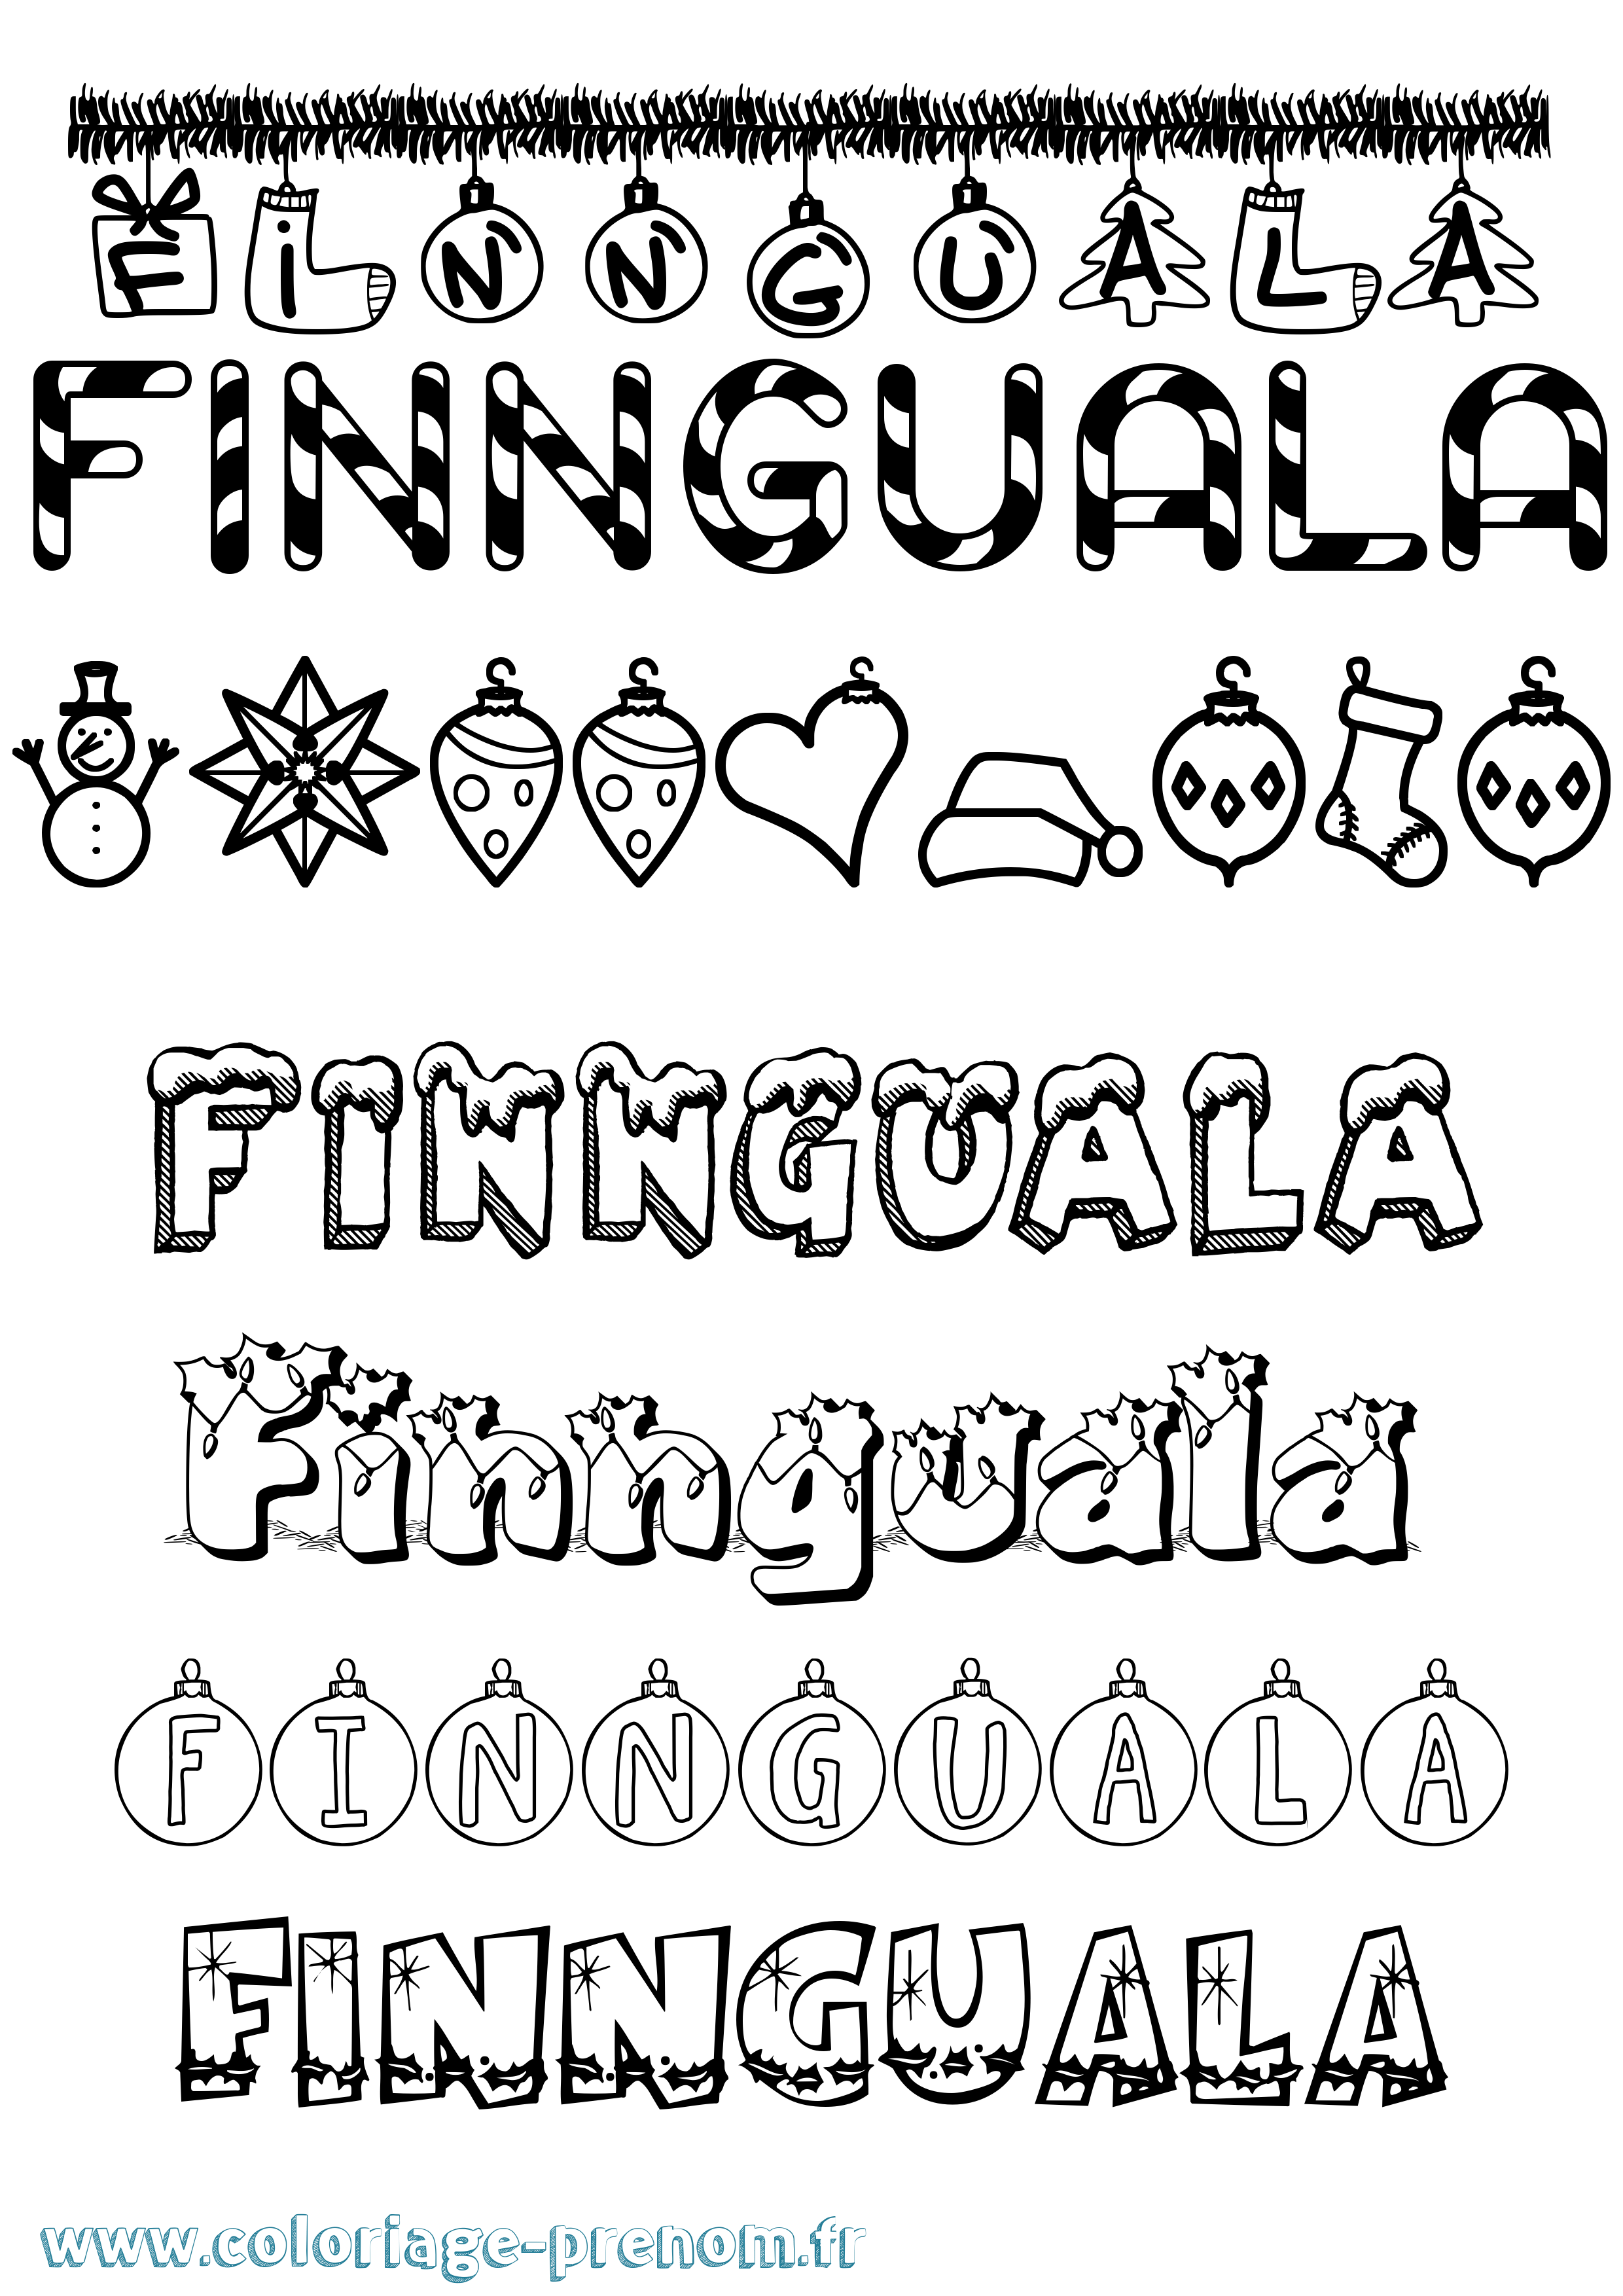 Coloriage prénom Finnguala Noël